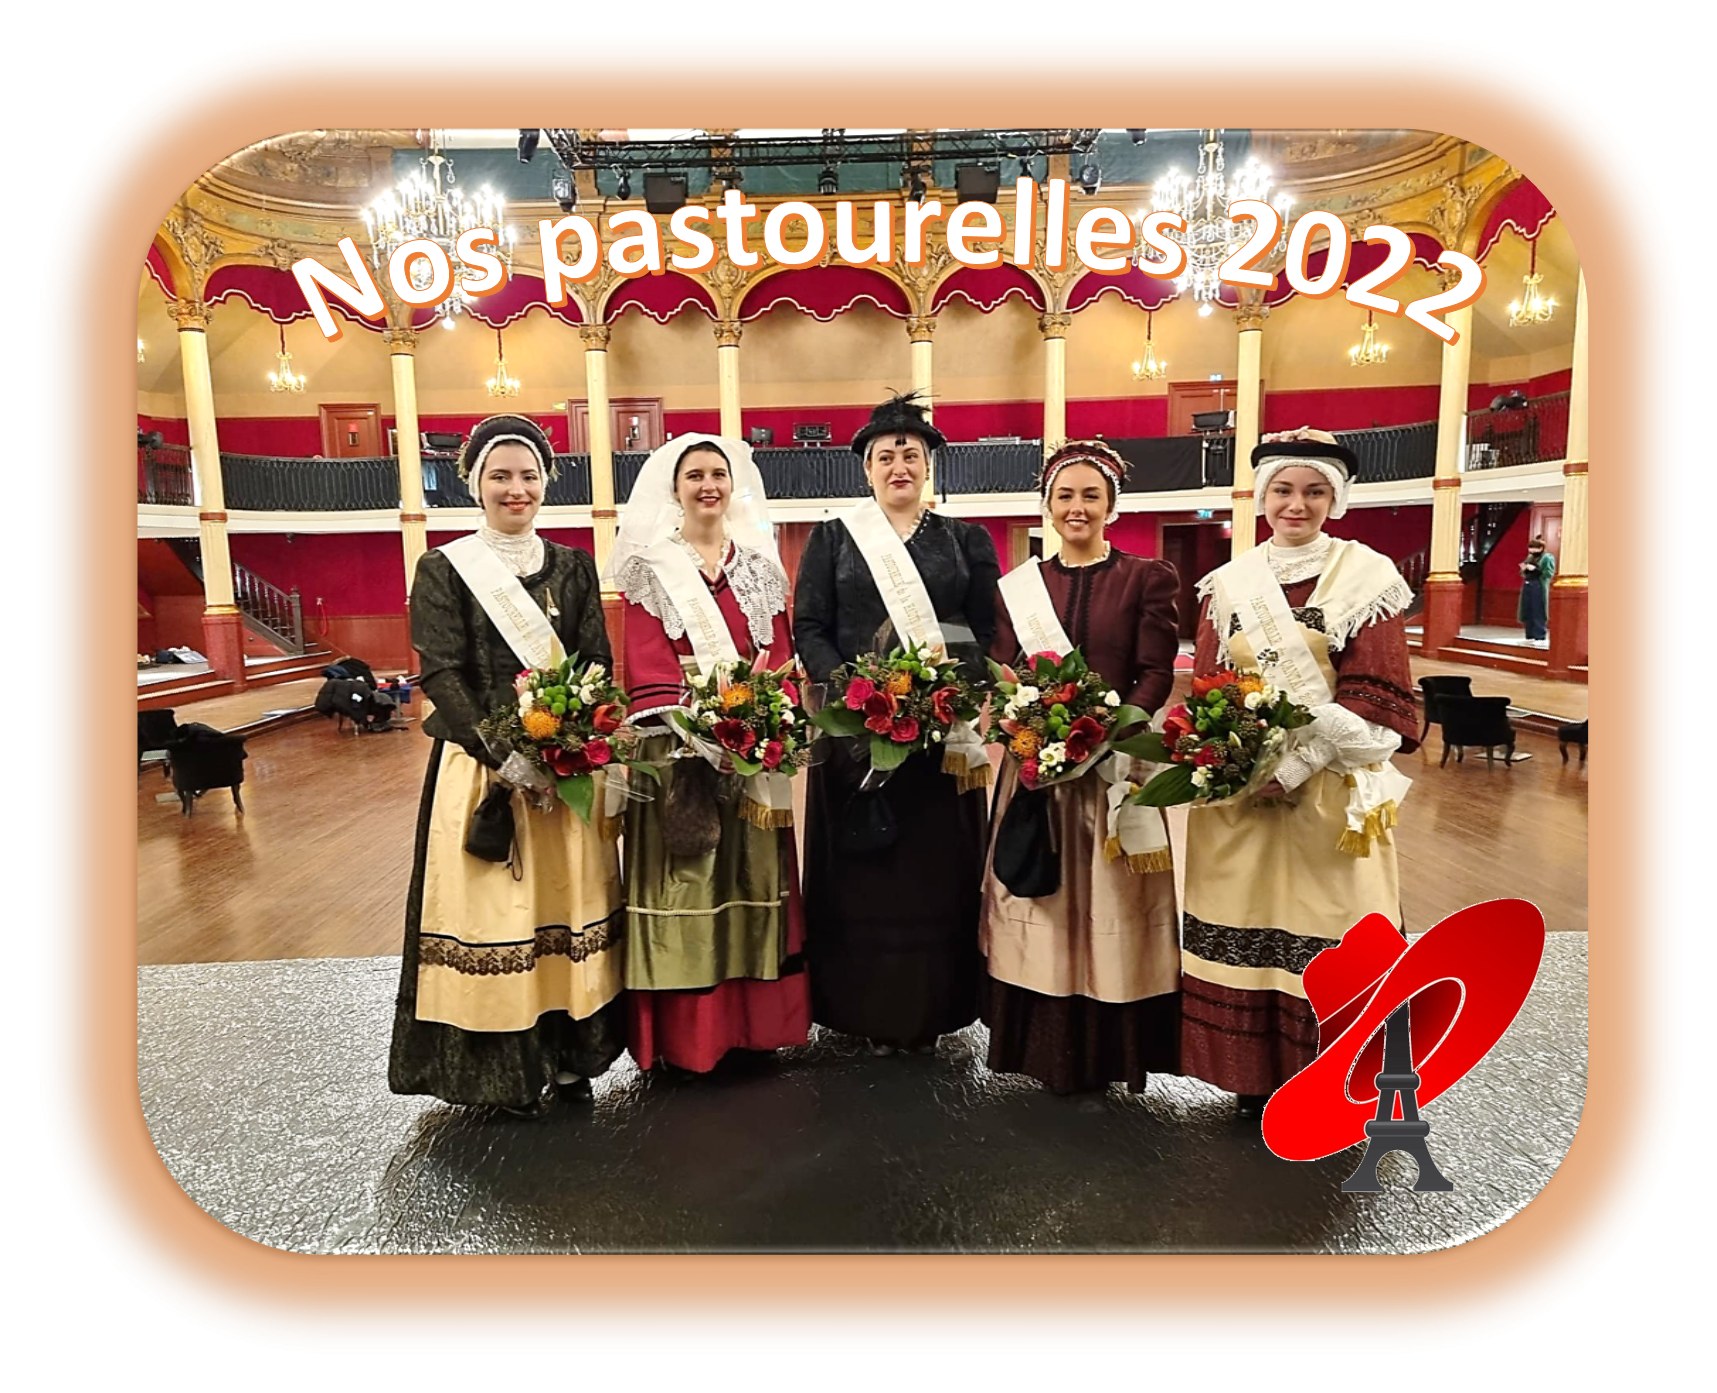 Pastourelles 2022